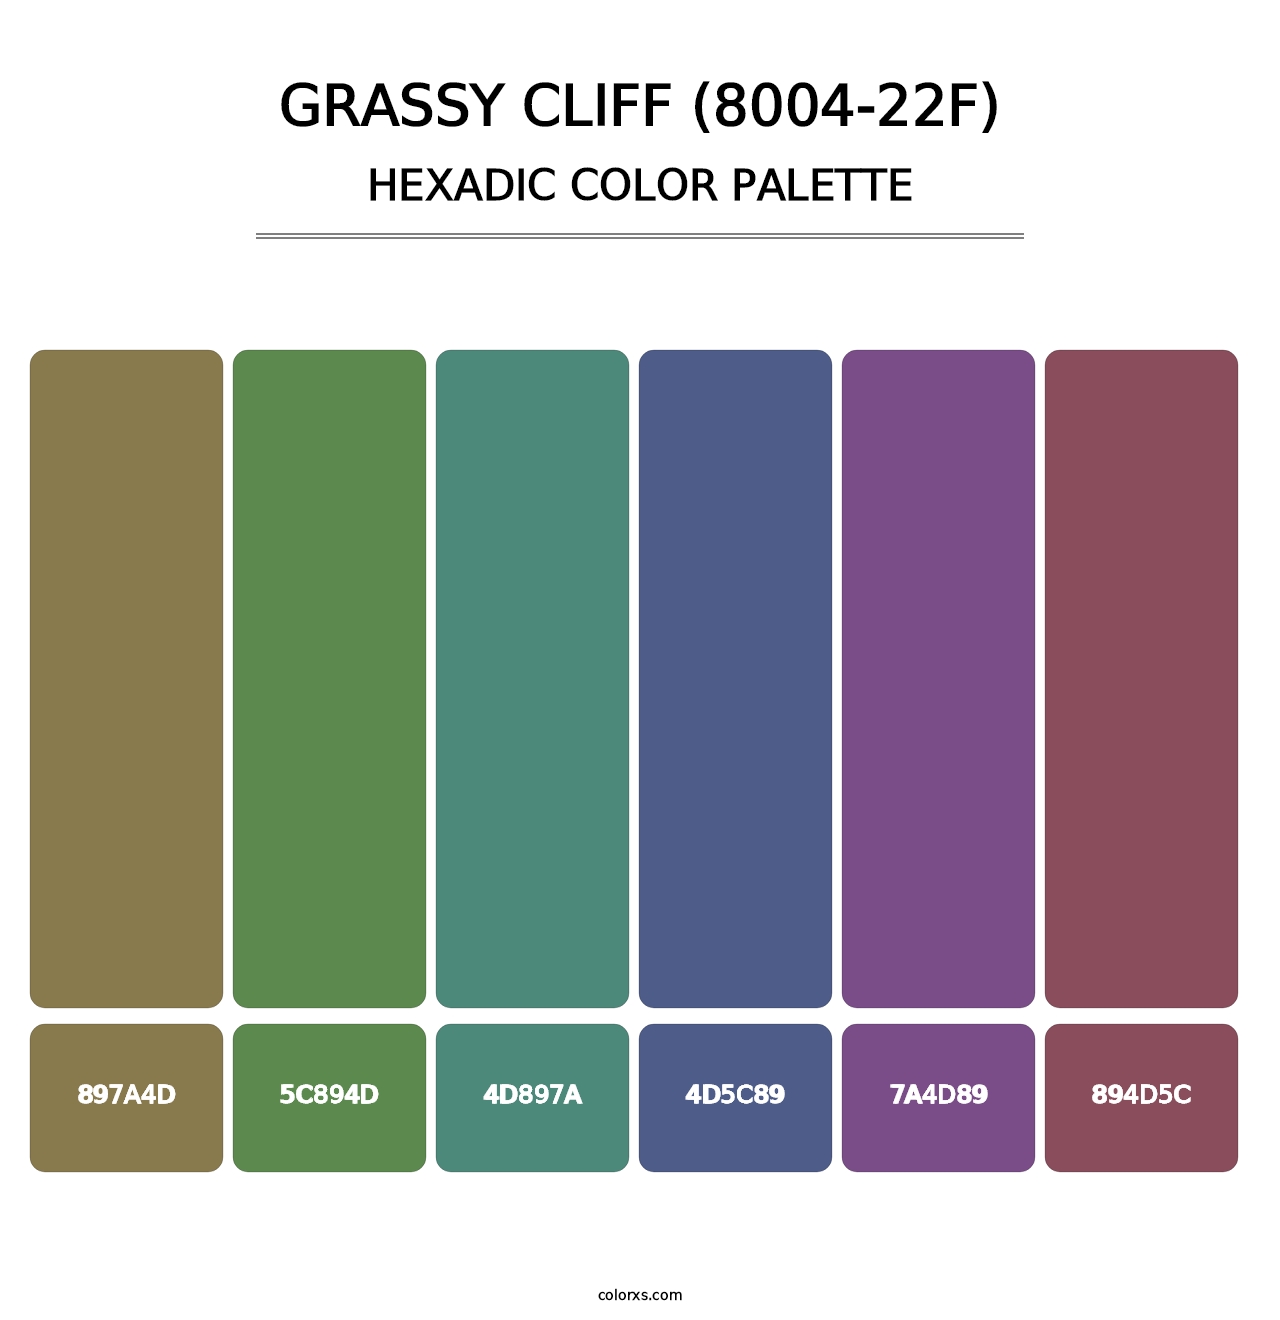 Grassy Cliff (8004-22F) - Hexadic Color Palette